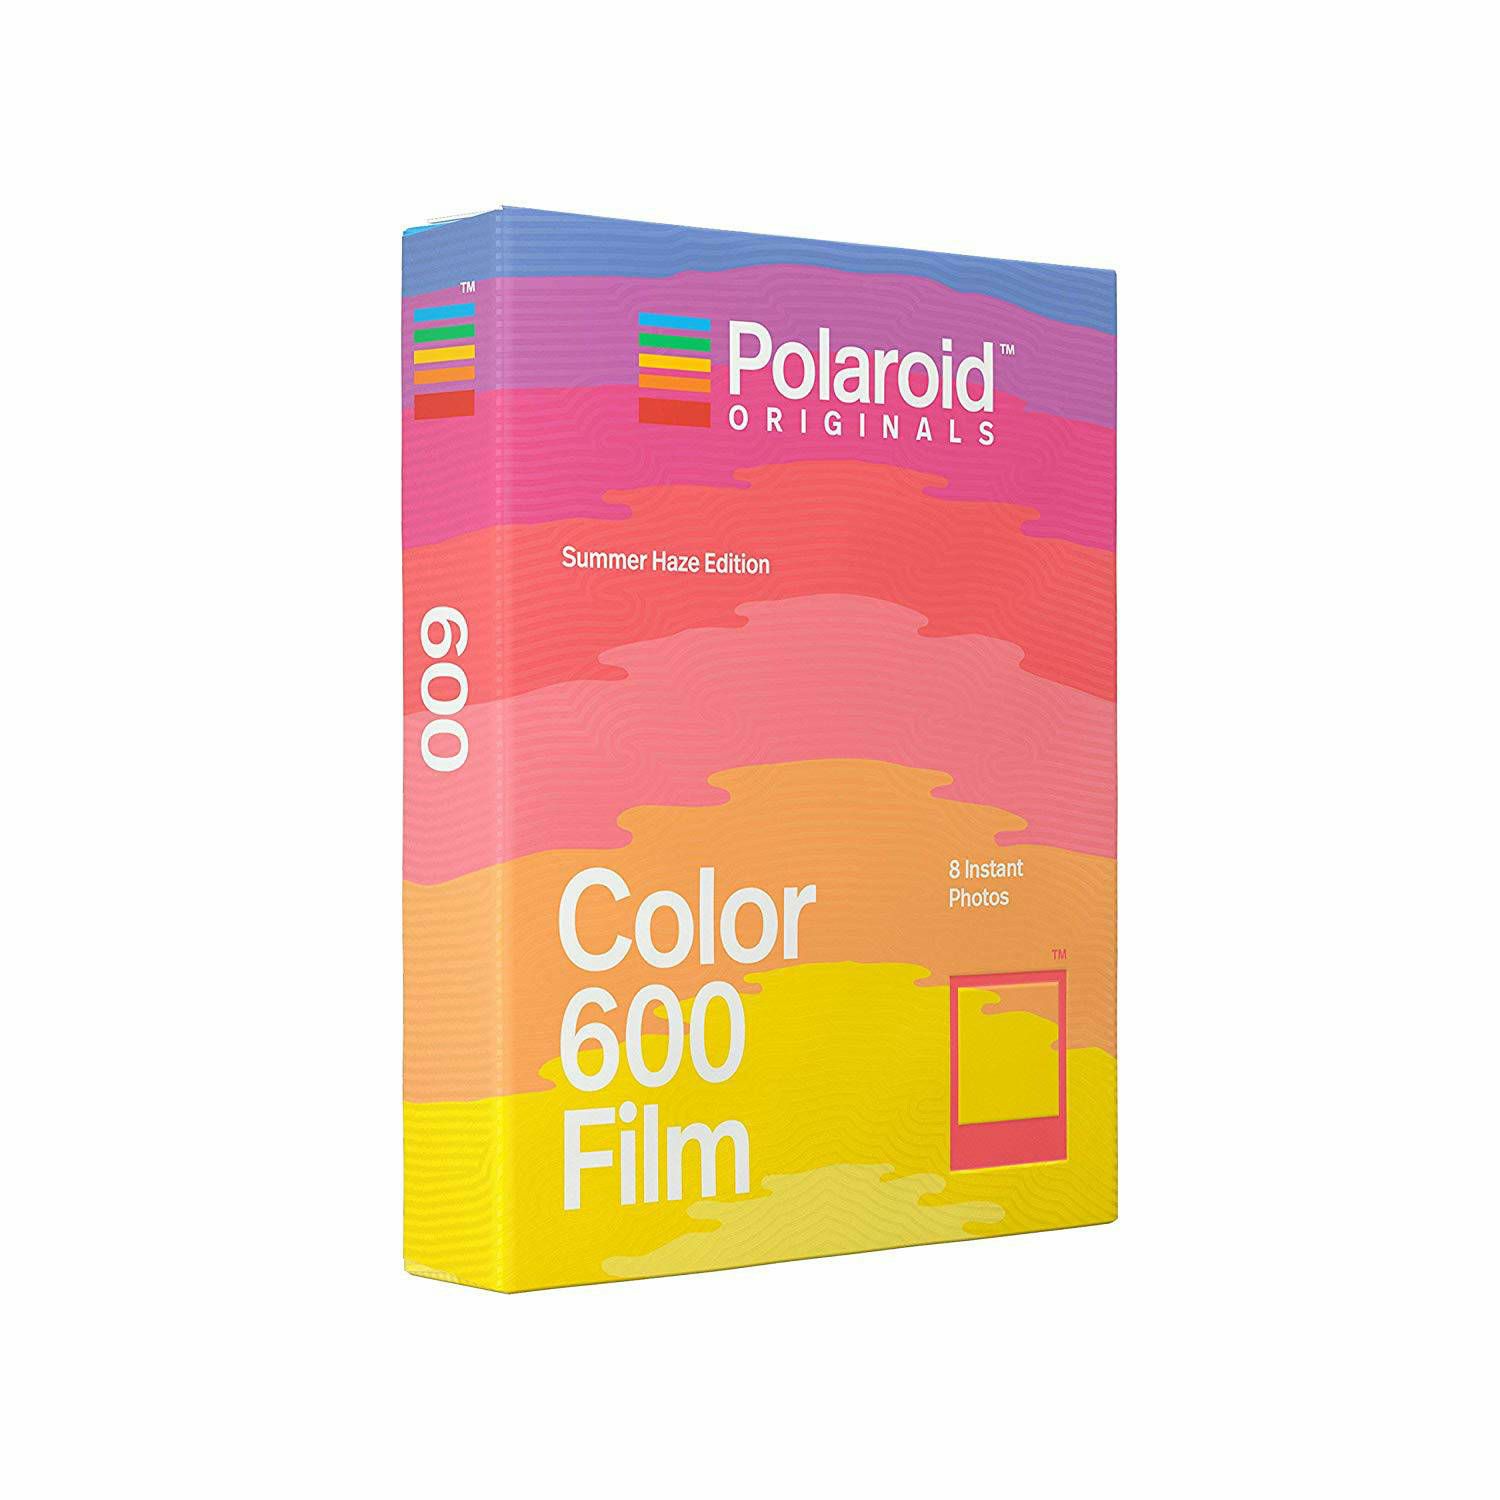 Polaroid Originals Color Film for 600 Summer Haze foto papir za fotografije u boji za Instant fotoaparate (004928)